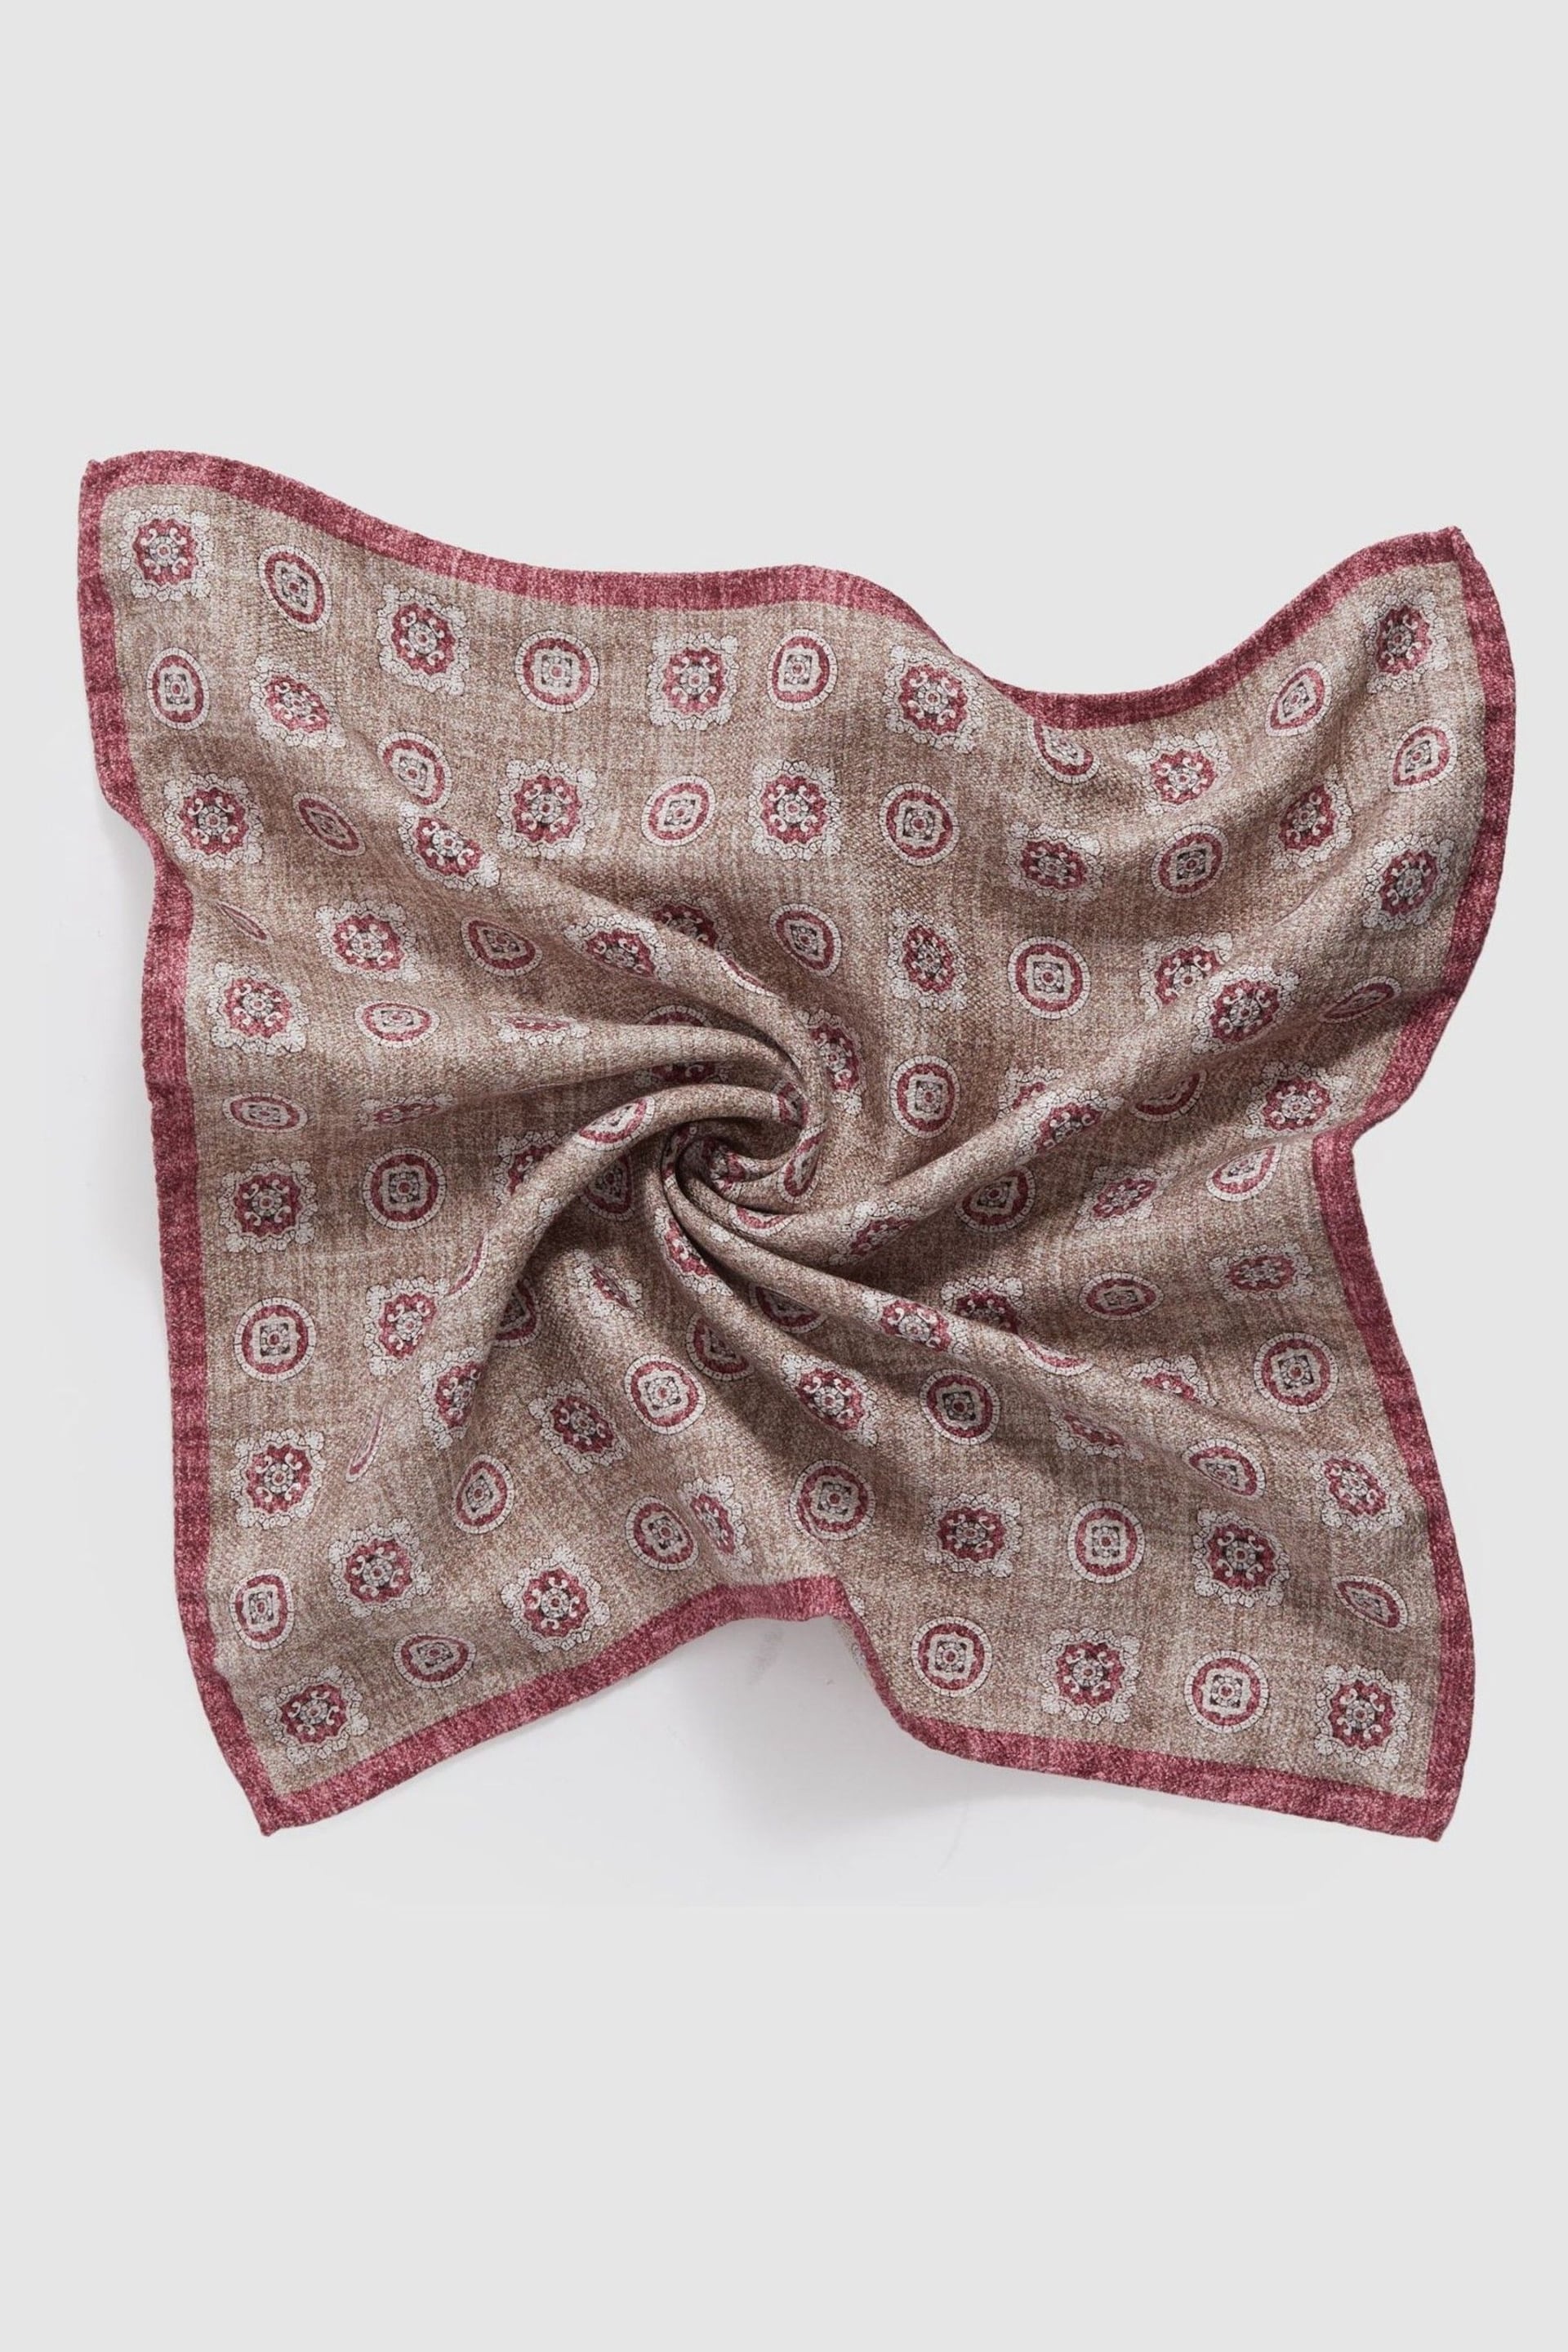 Reiss Oatmeal/Rose Tindari Silk Reversible Pocket Square - Image 5 of 5